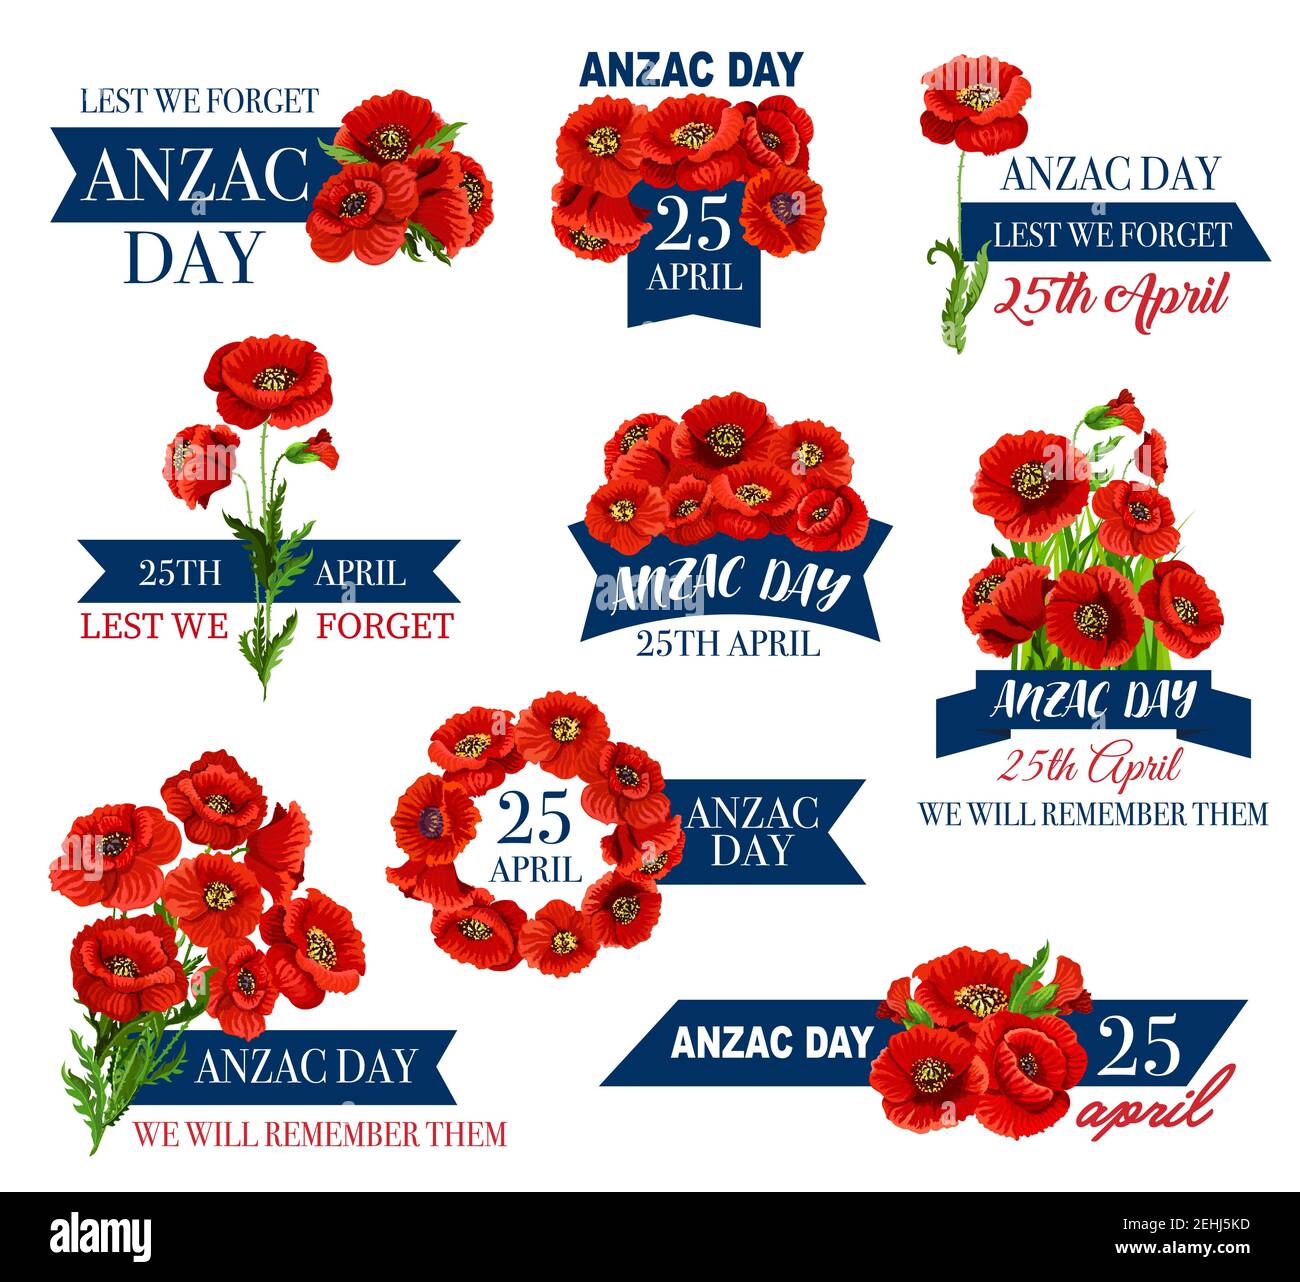 Anzac Day Ikone mit roter Mohnblume und Gedenkband. Australian and New Zealand Army Corps Remembrance Day florales Symbol für Mohnkranz und Bunc Stock Vektor